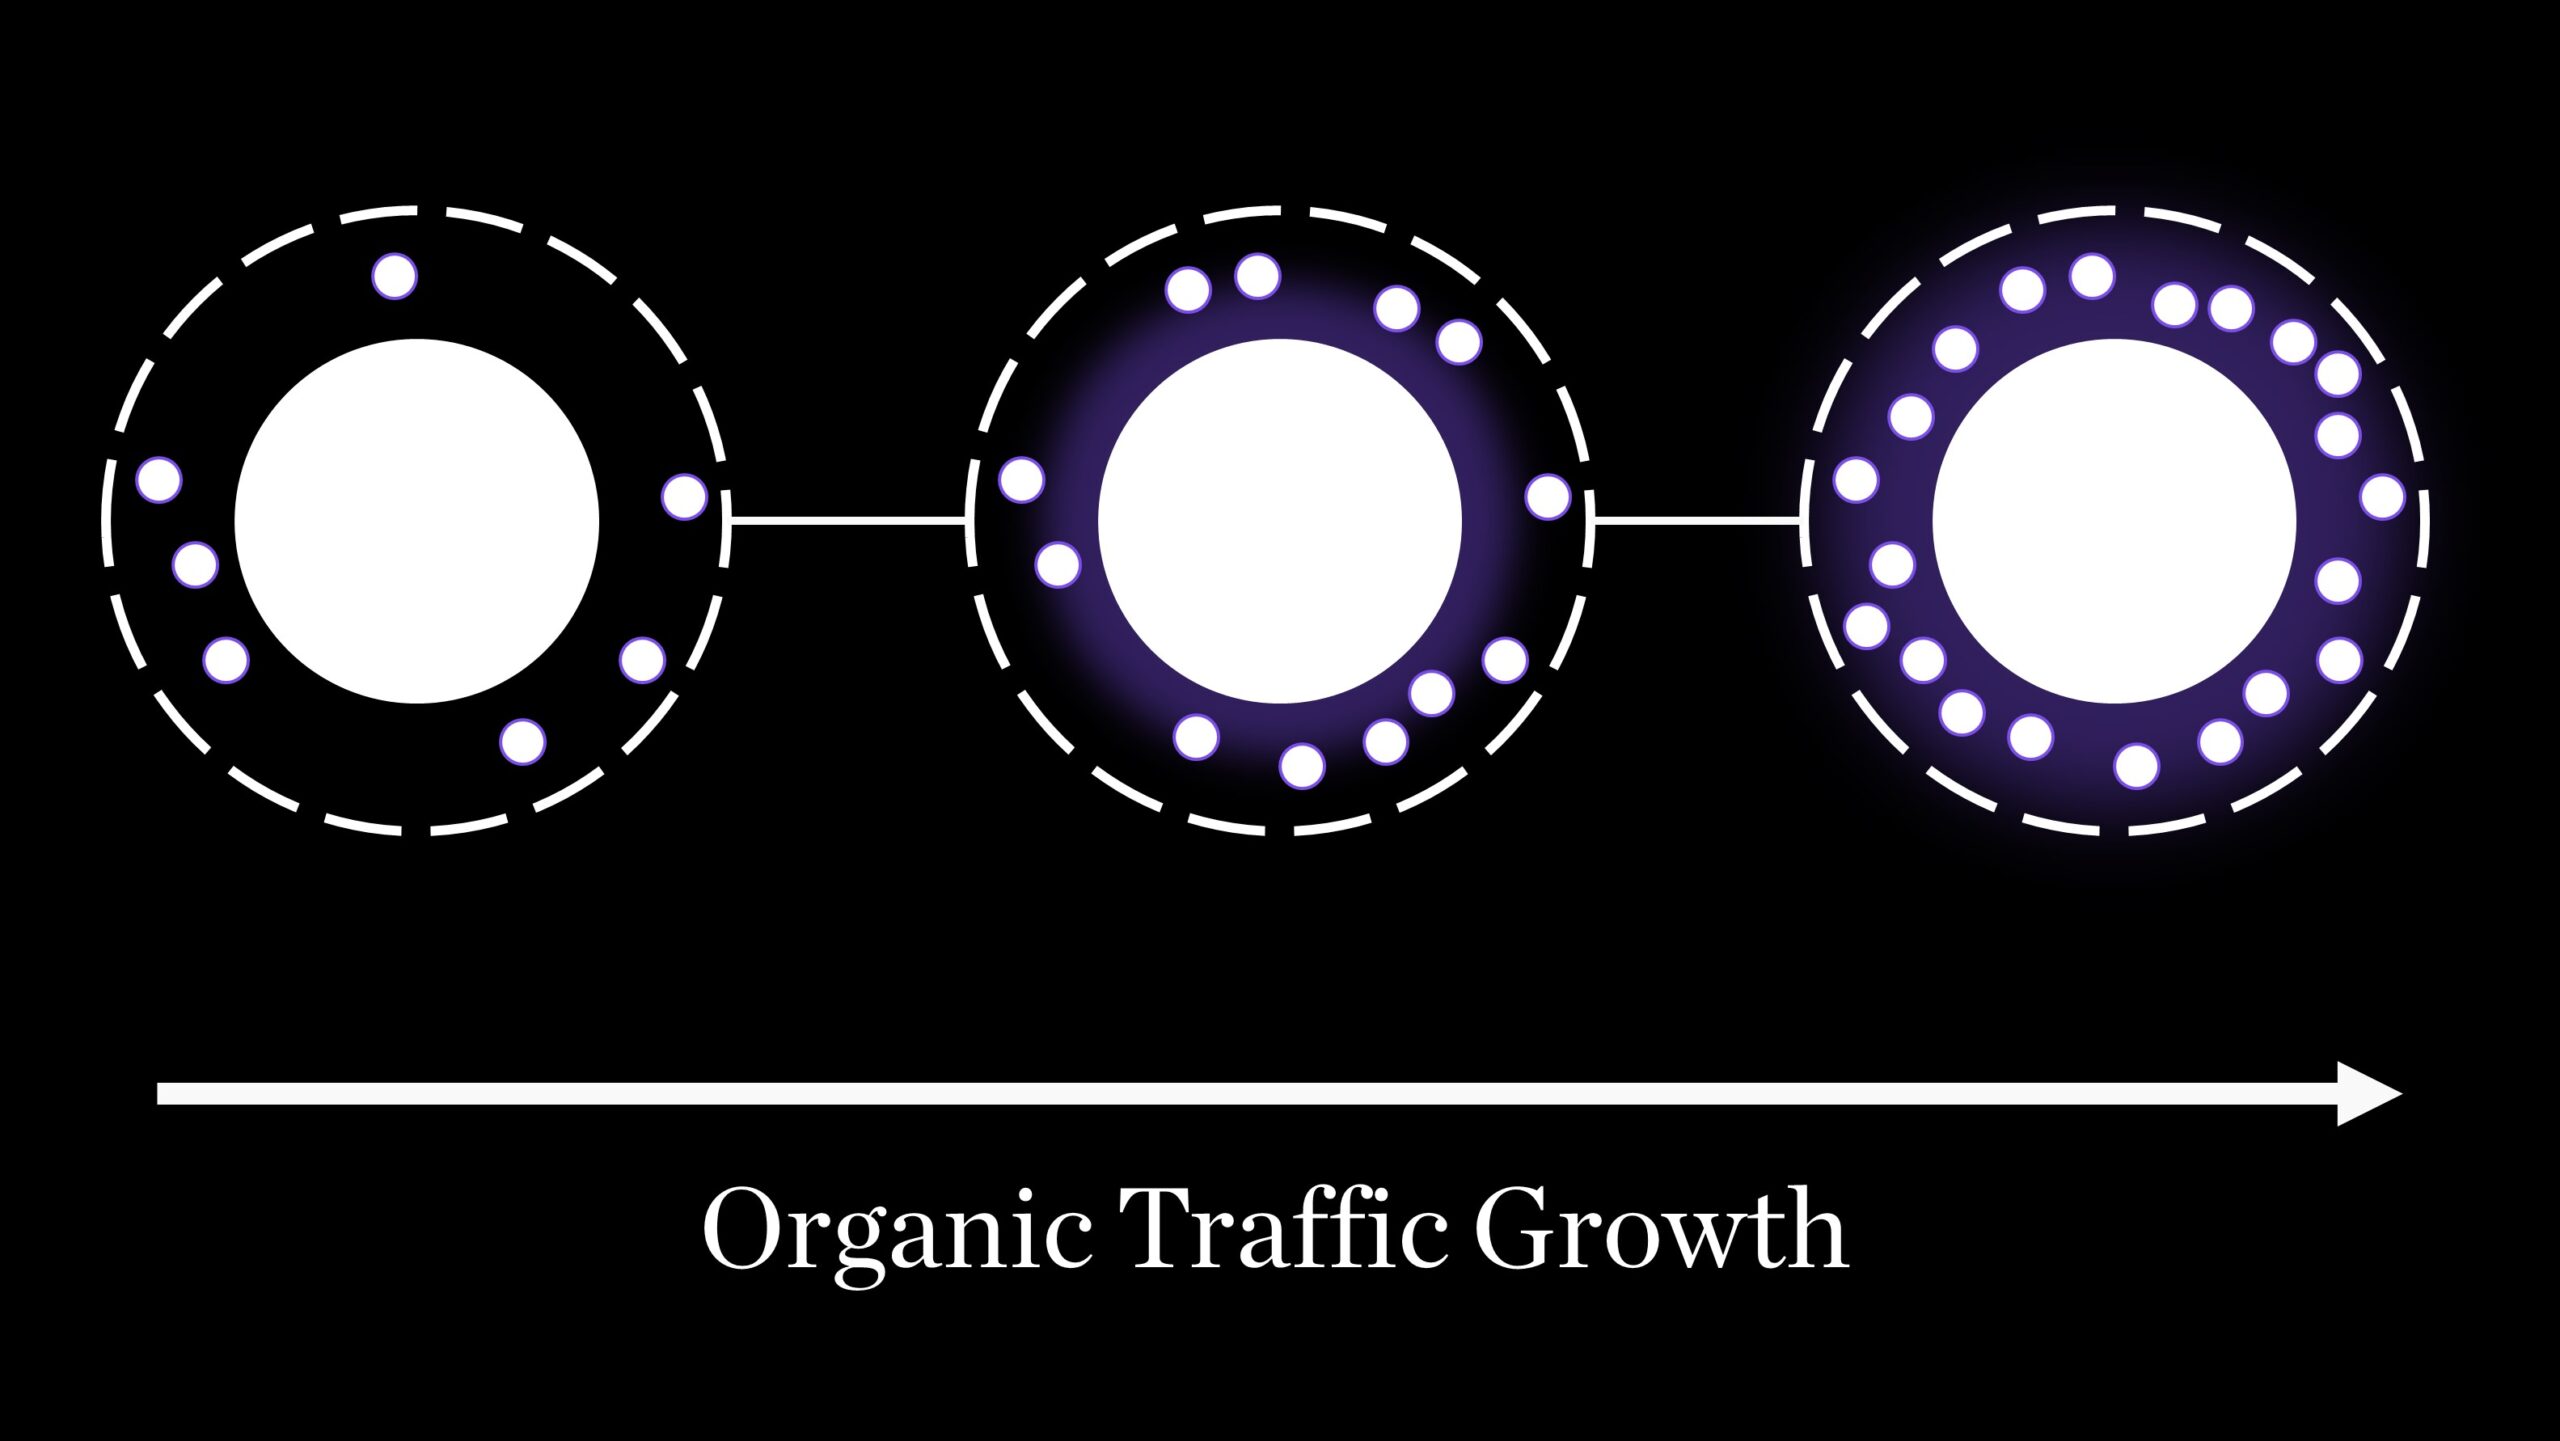 How long for Organic Traffic